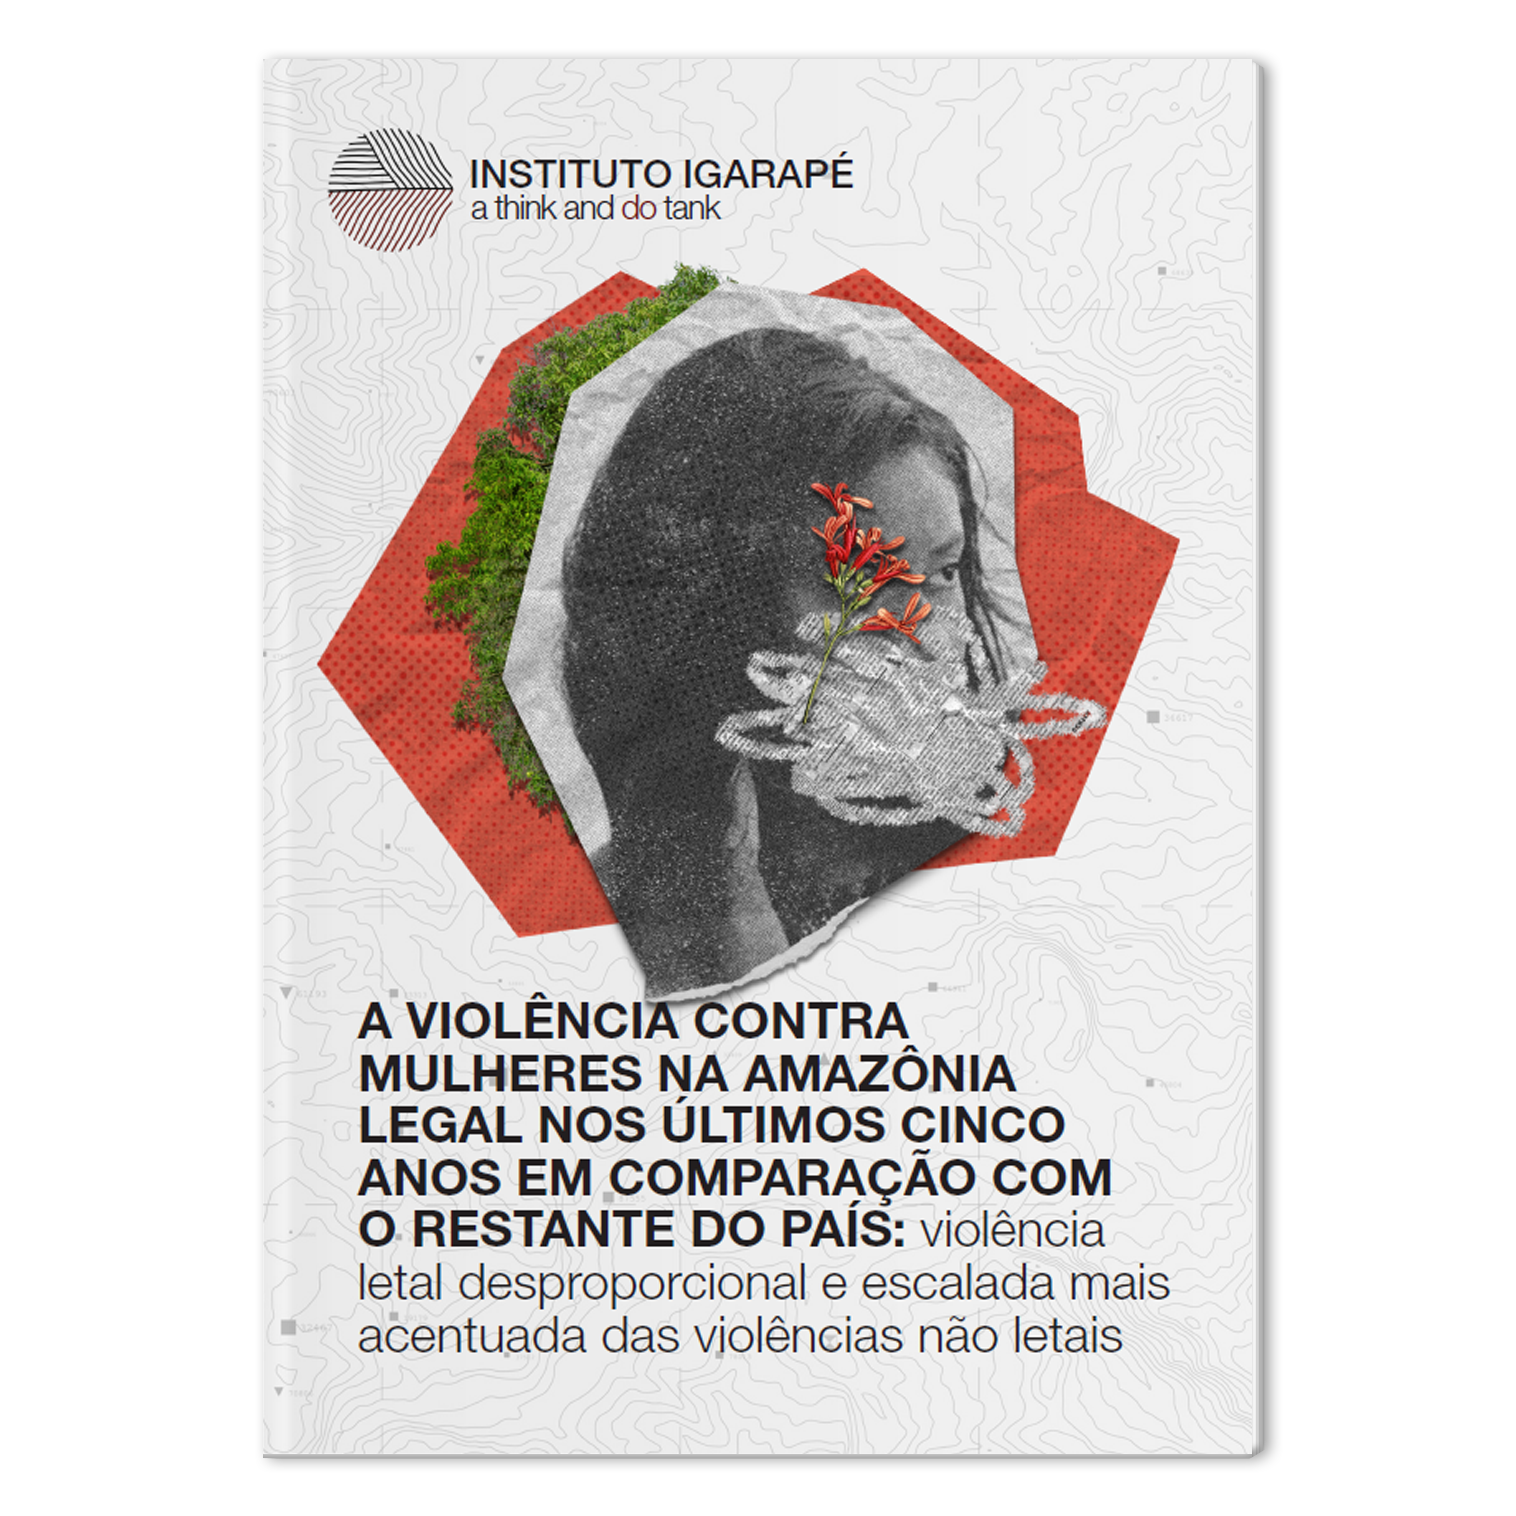 Mock-violencia-mulheres-amazonia-5anos-PT